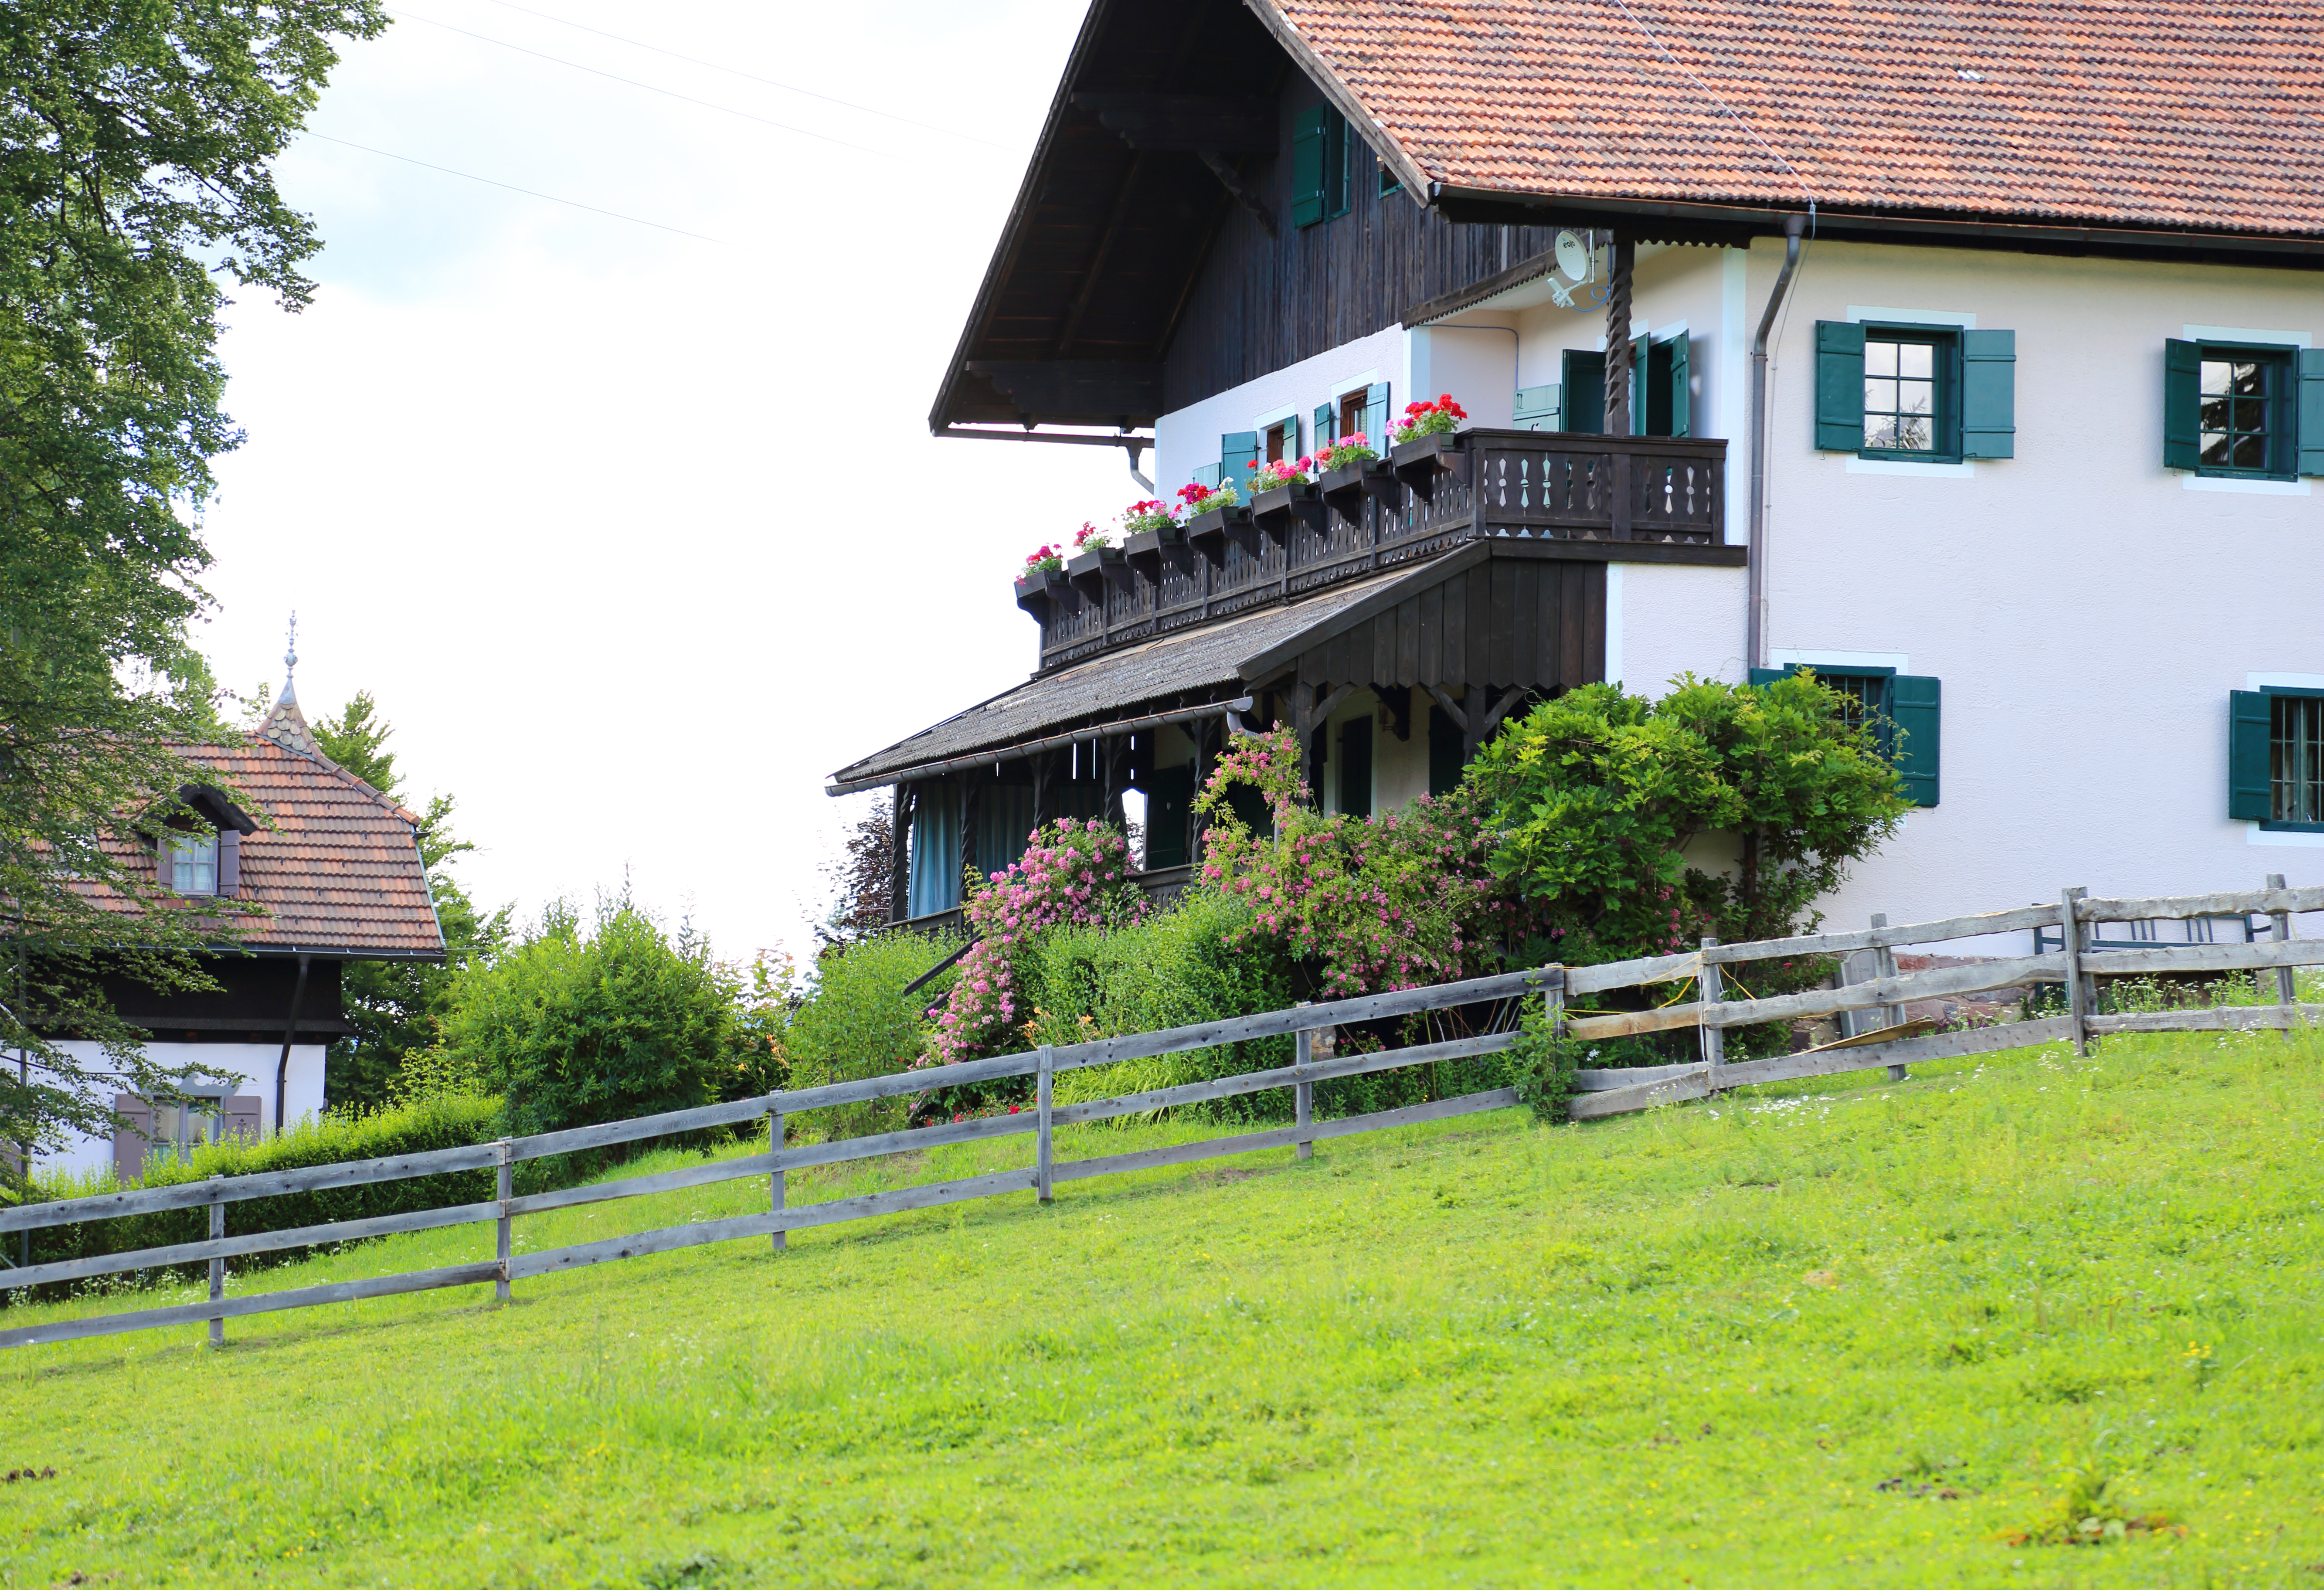 Malinowskis' house in Oberbozen. Photo by I.M.Carta